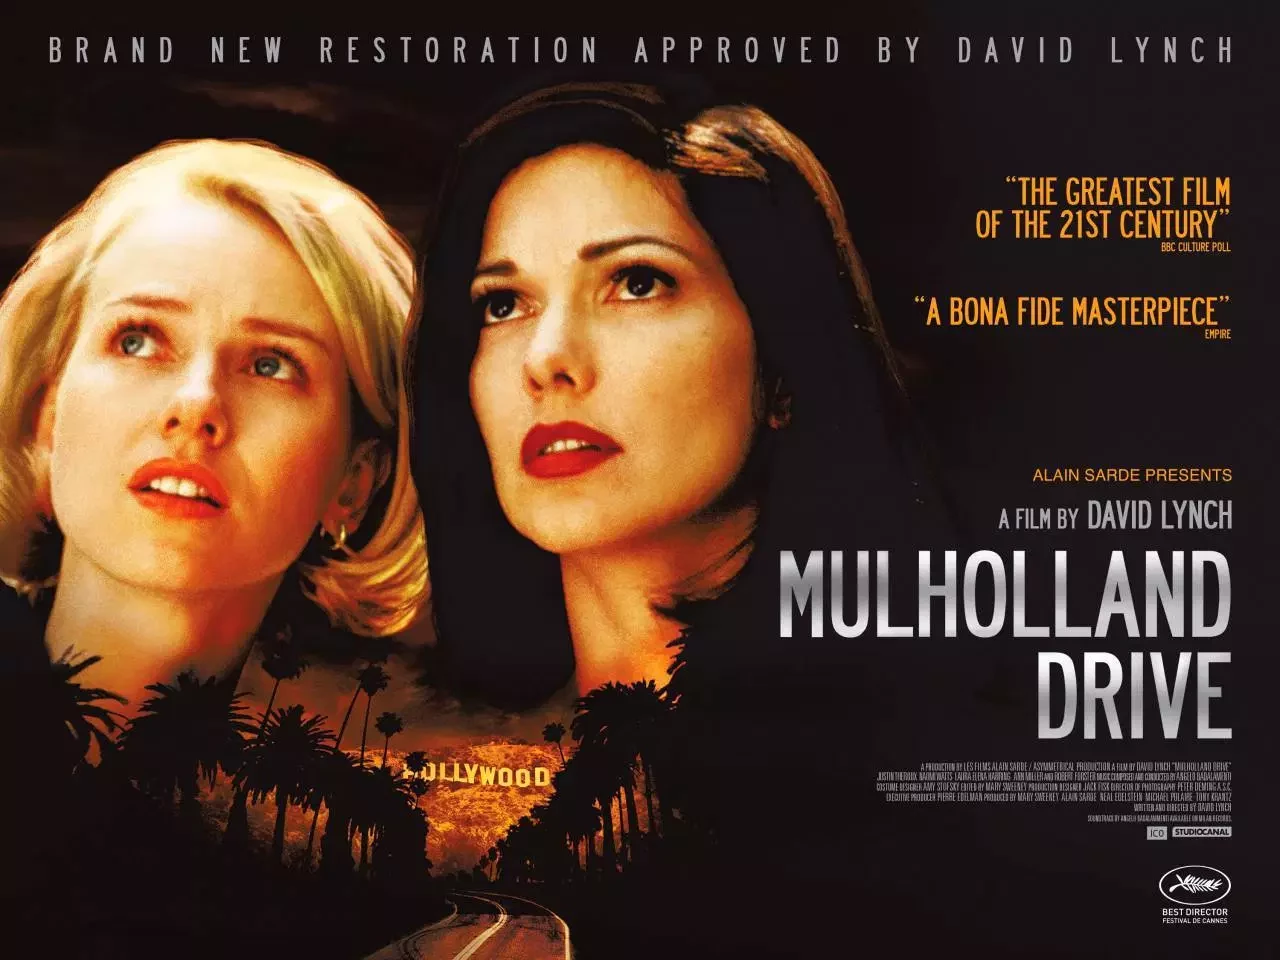 Mulholland Drive (2001) - Movies like Black Swan